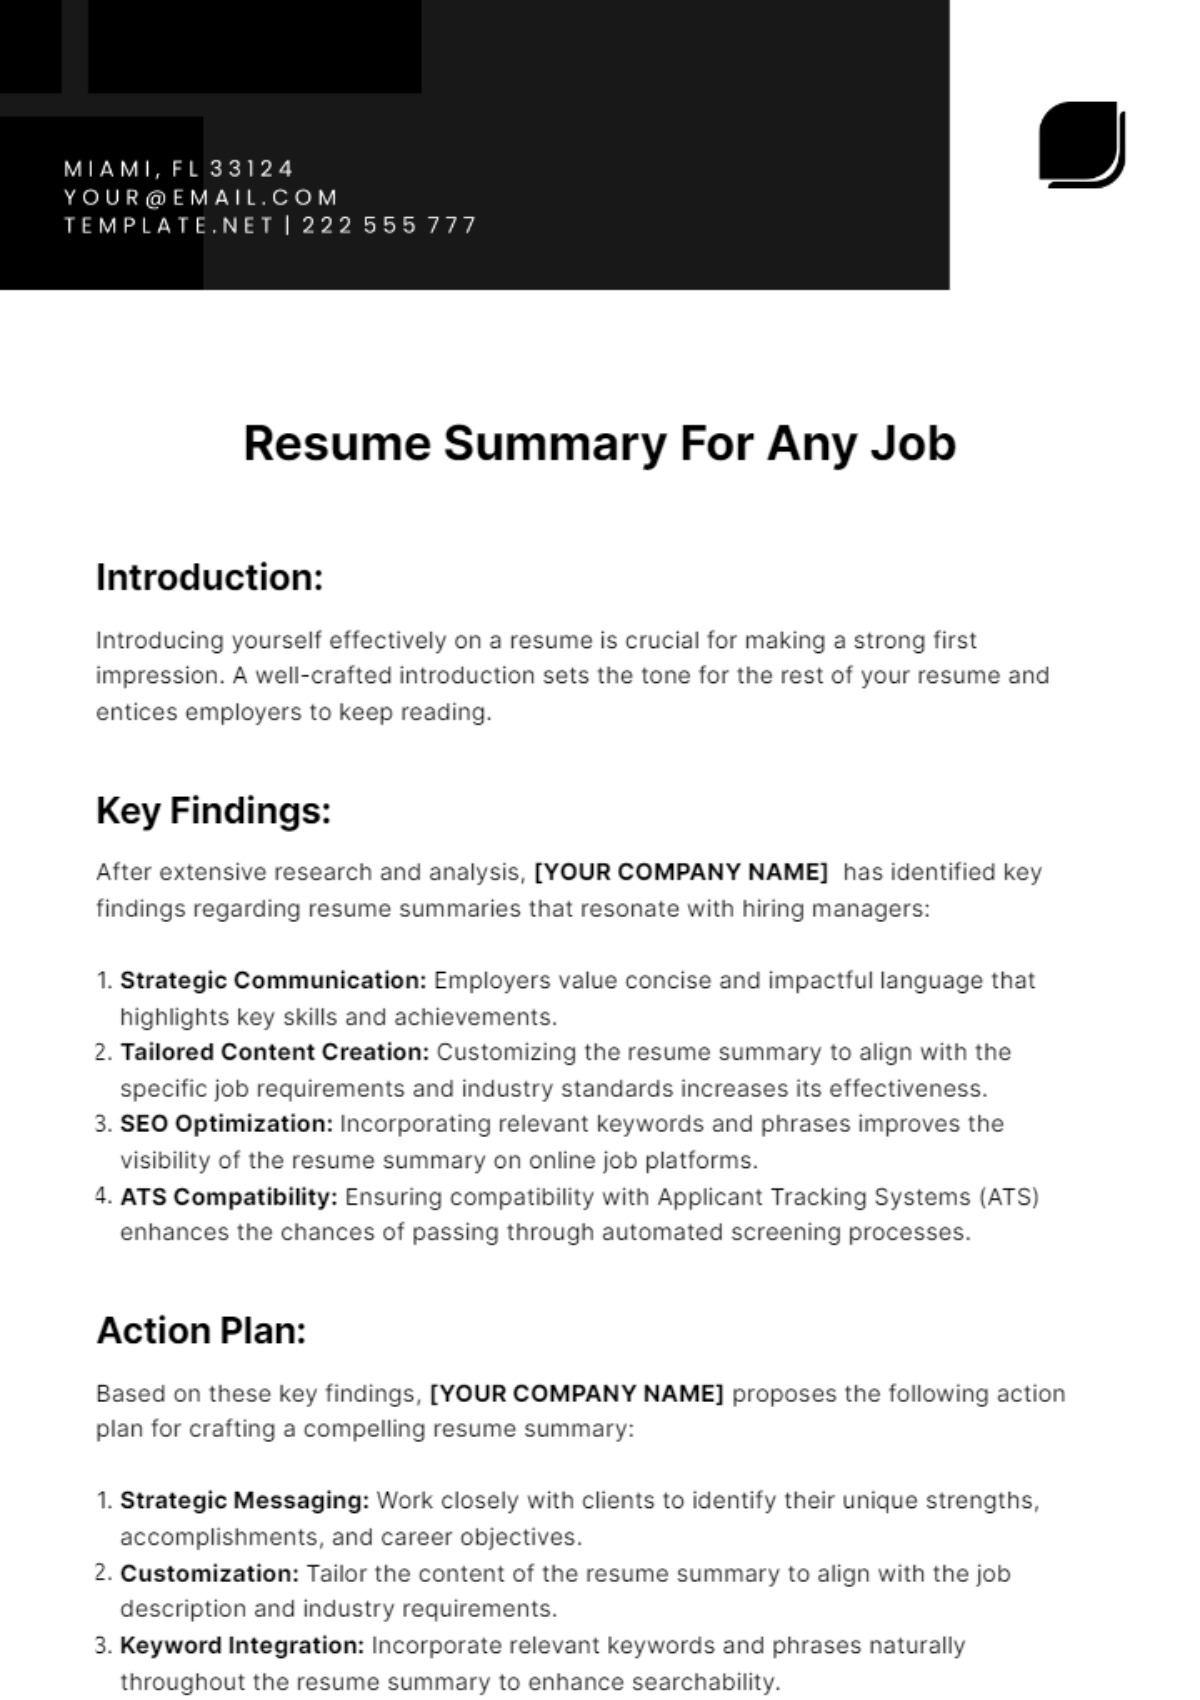 Resume Summary For Any Job Template